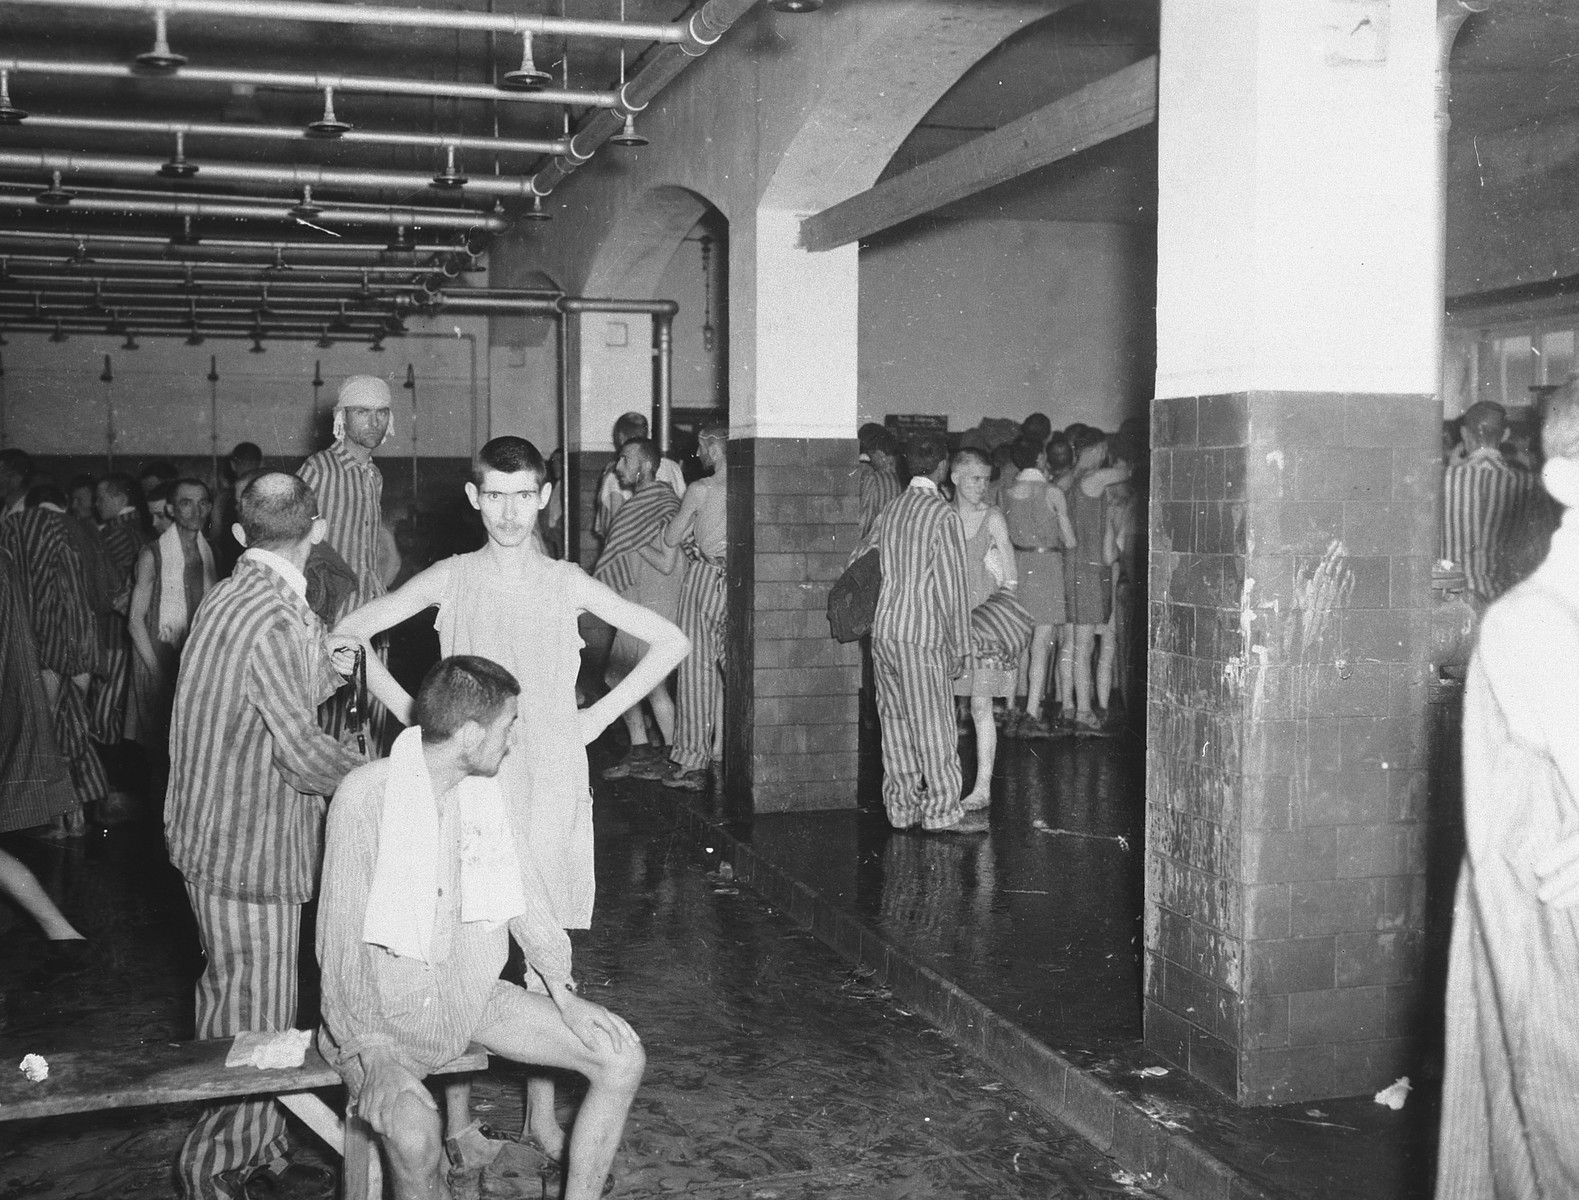 Survivors in the shower barracks after liberation.